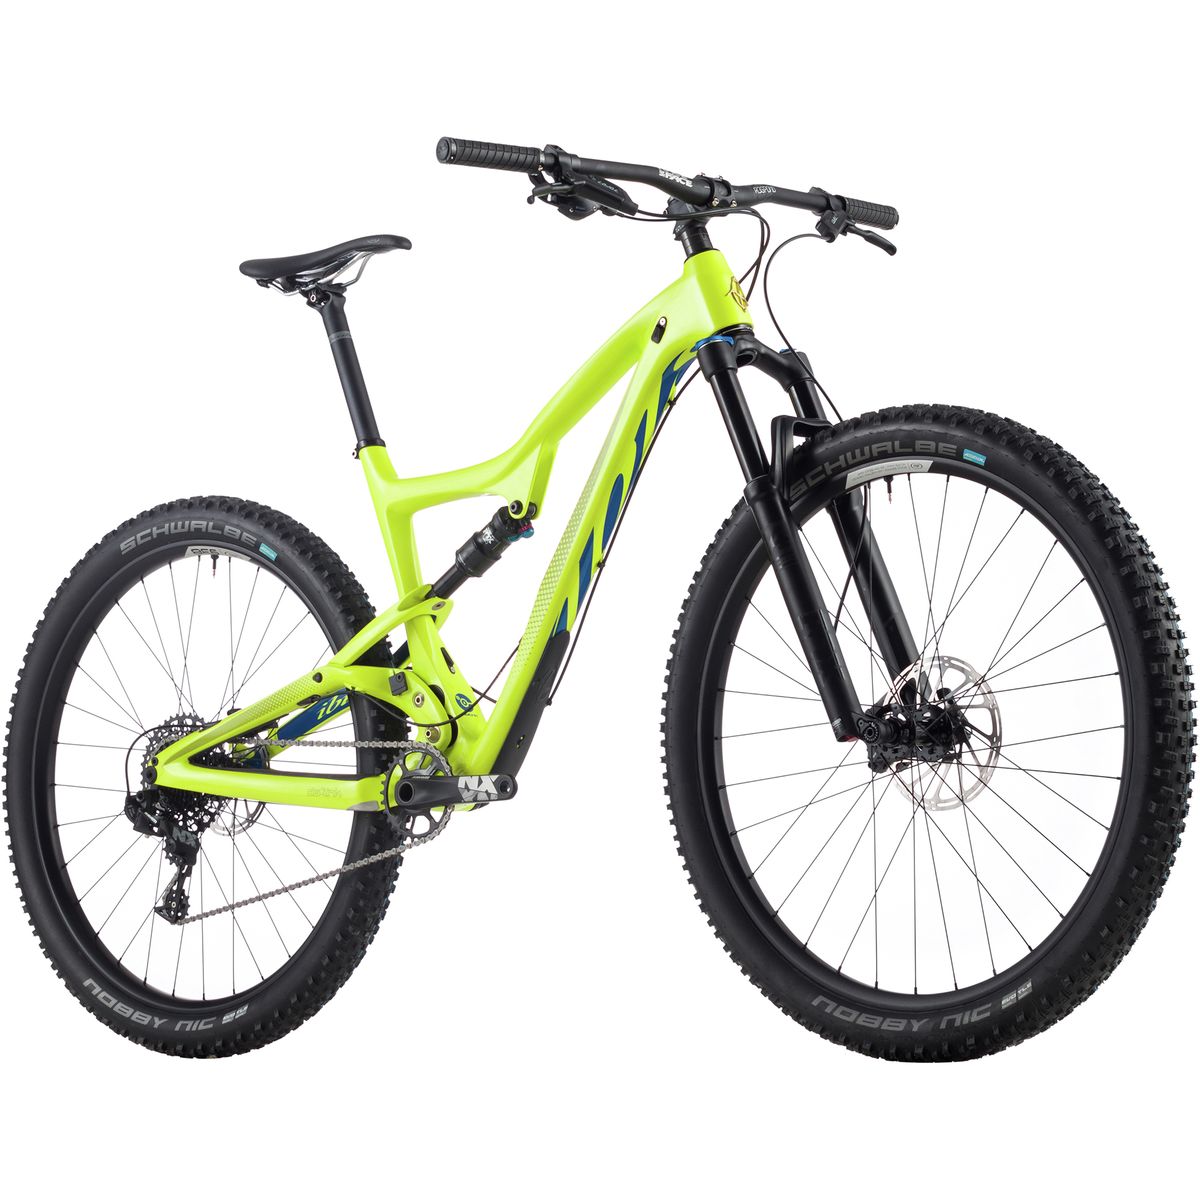 Ibis Ripley LS Carbon 30 NX Complete Mountain Bike 2018